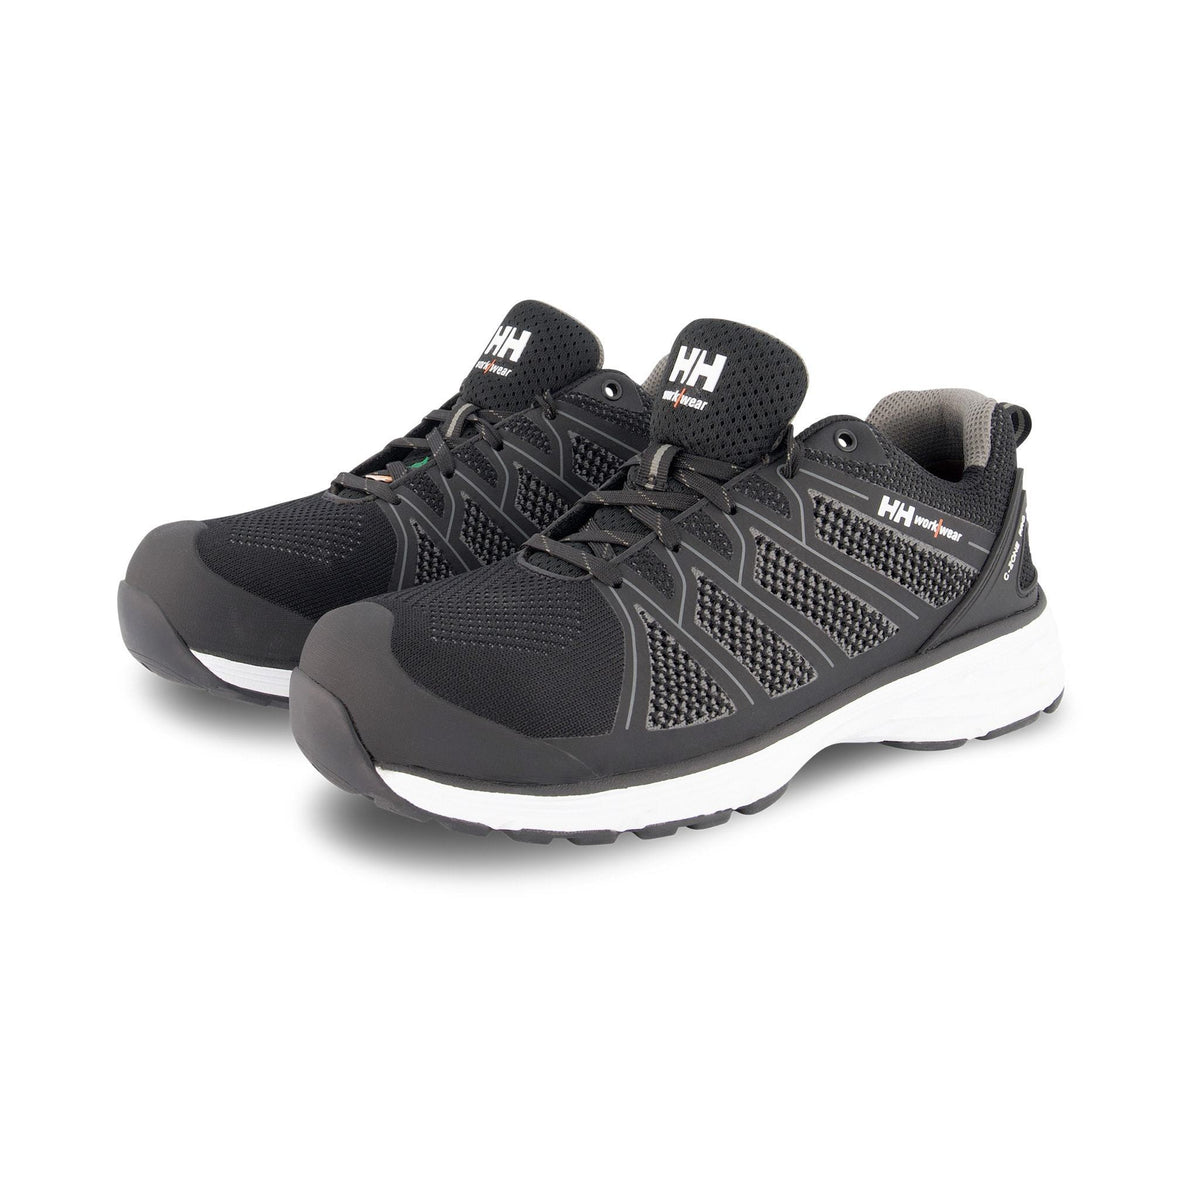 Helly Hansen Workwear Men's Aluminum Toe Steel Plate Welded Athletic Work  Shoes - Black/Grey